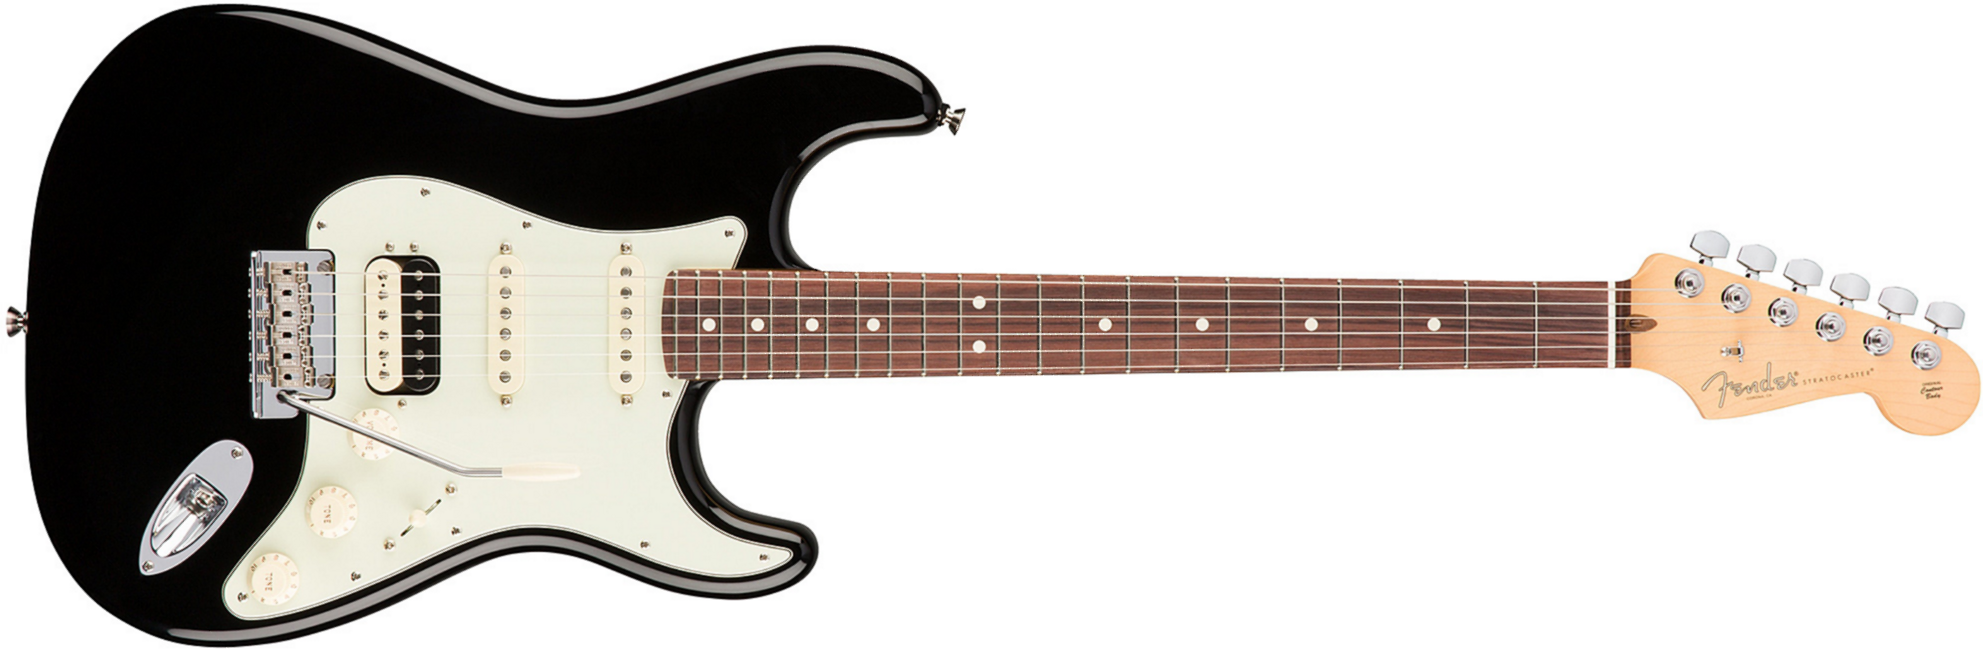 Fender Strat Hss Shawbucker American Professional Usa Rw - Black - 12 string electric guitar - Main picture